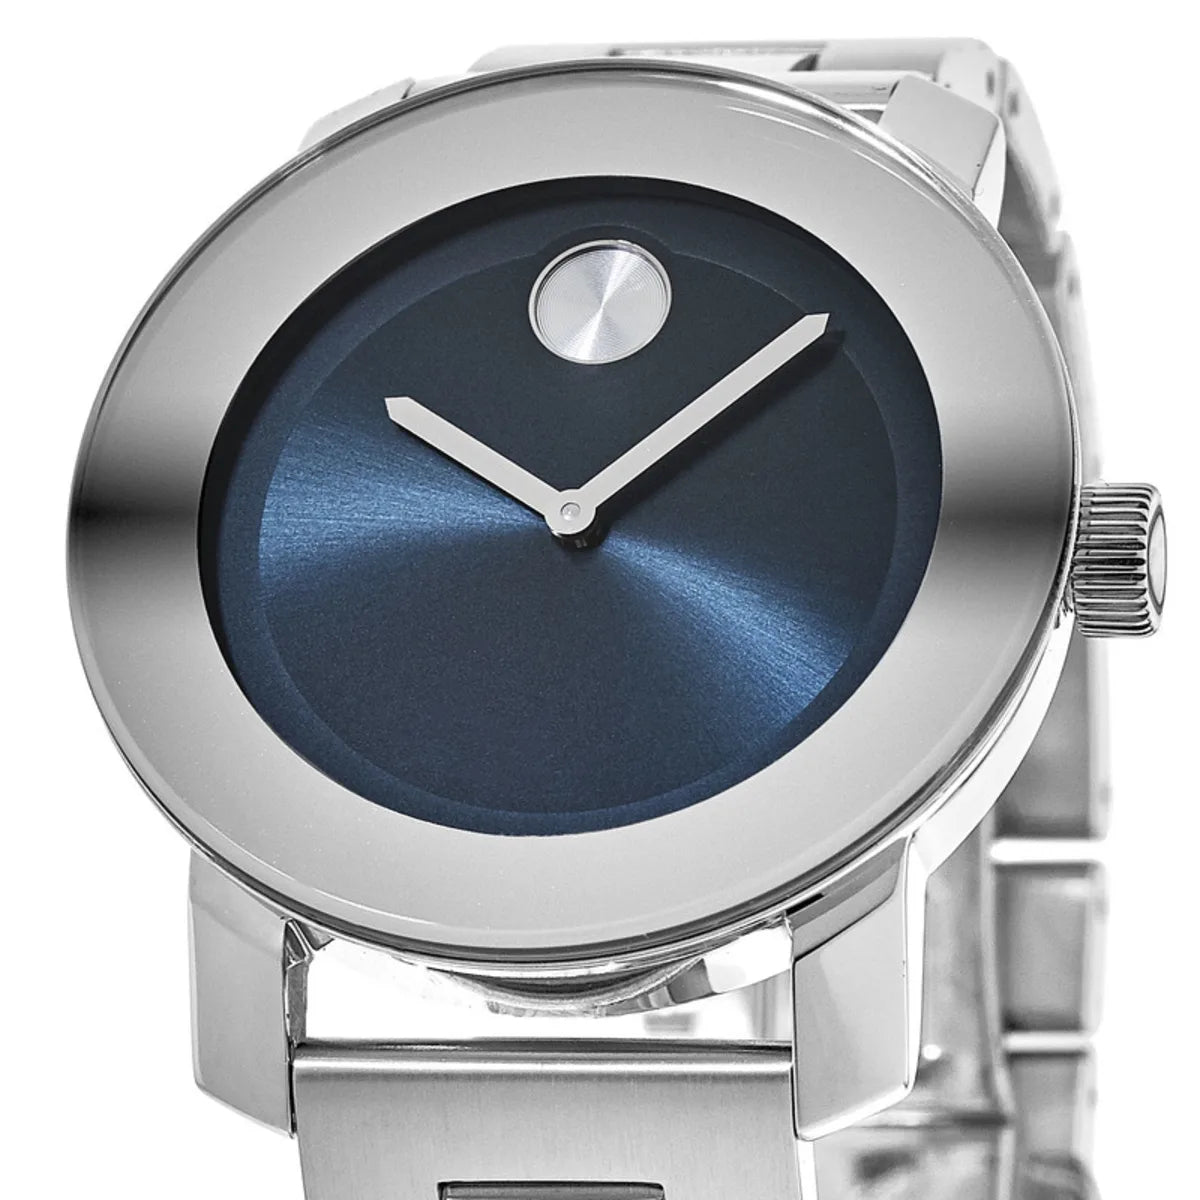 Movado Bold Blue Dial Silver Steel Strap Watch for Women - 3600396